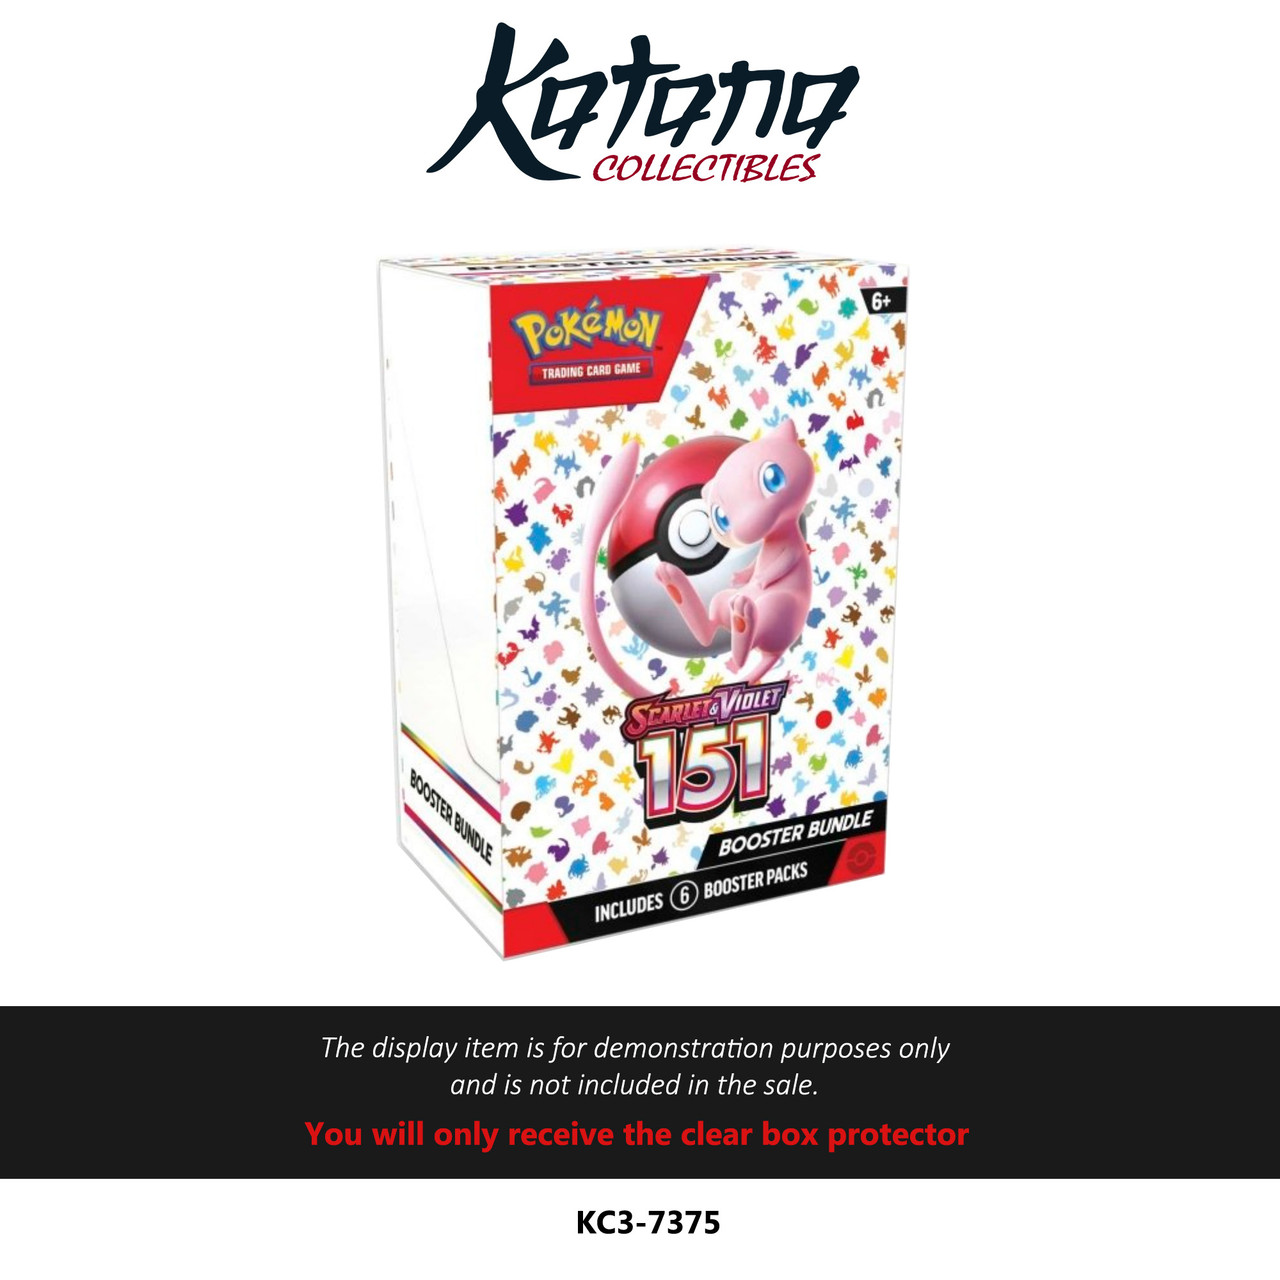 Katana Collectibles Protector For Pokemon 151 English Booster Bundle